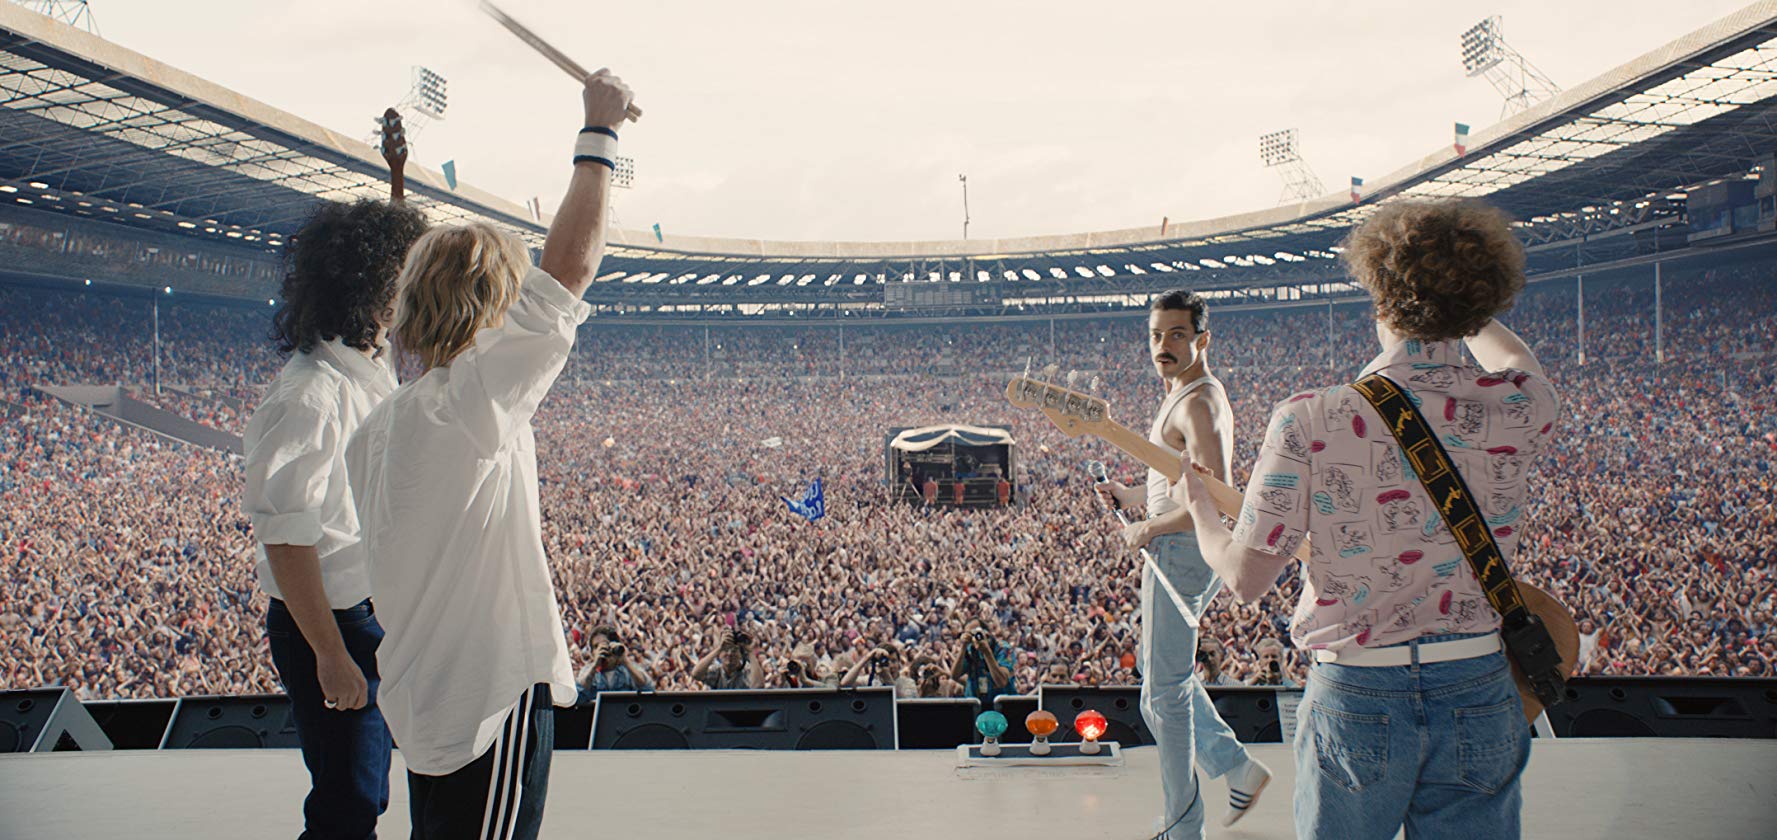 Bohemian Rhapsody - Live Aid